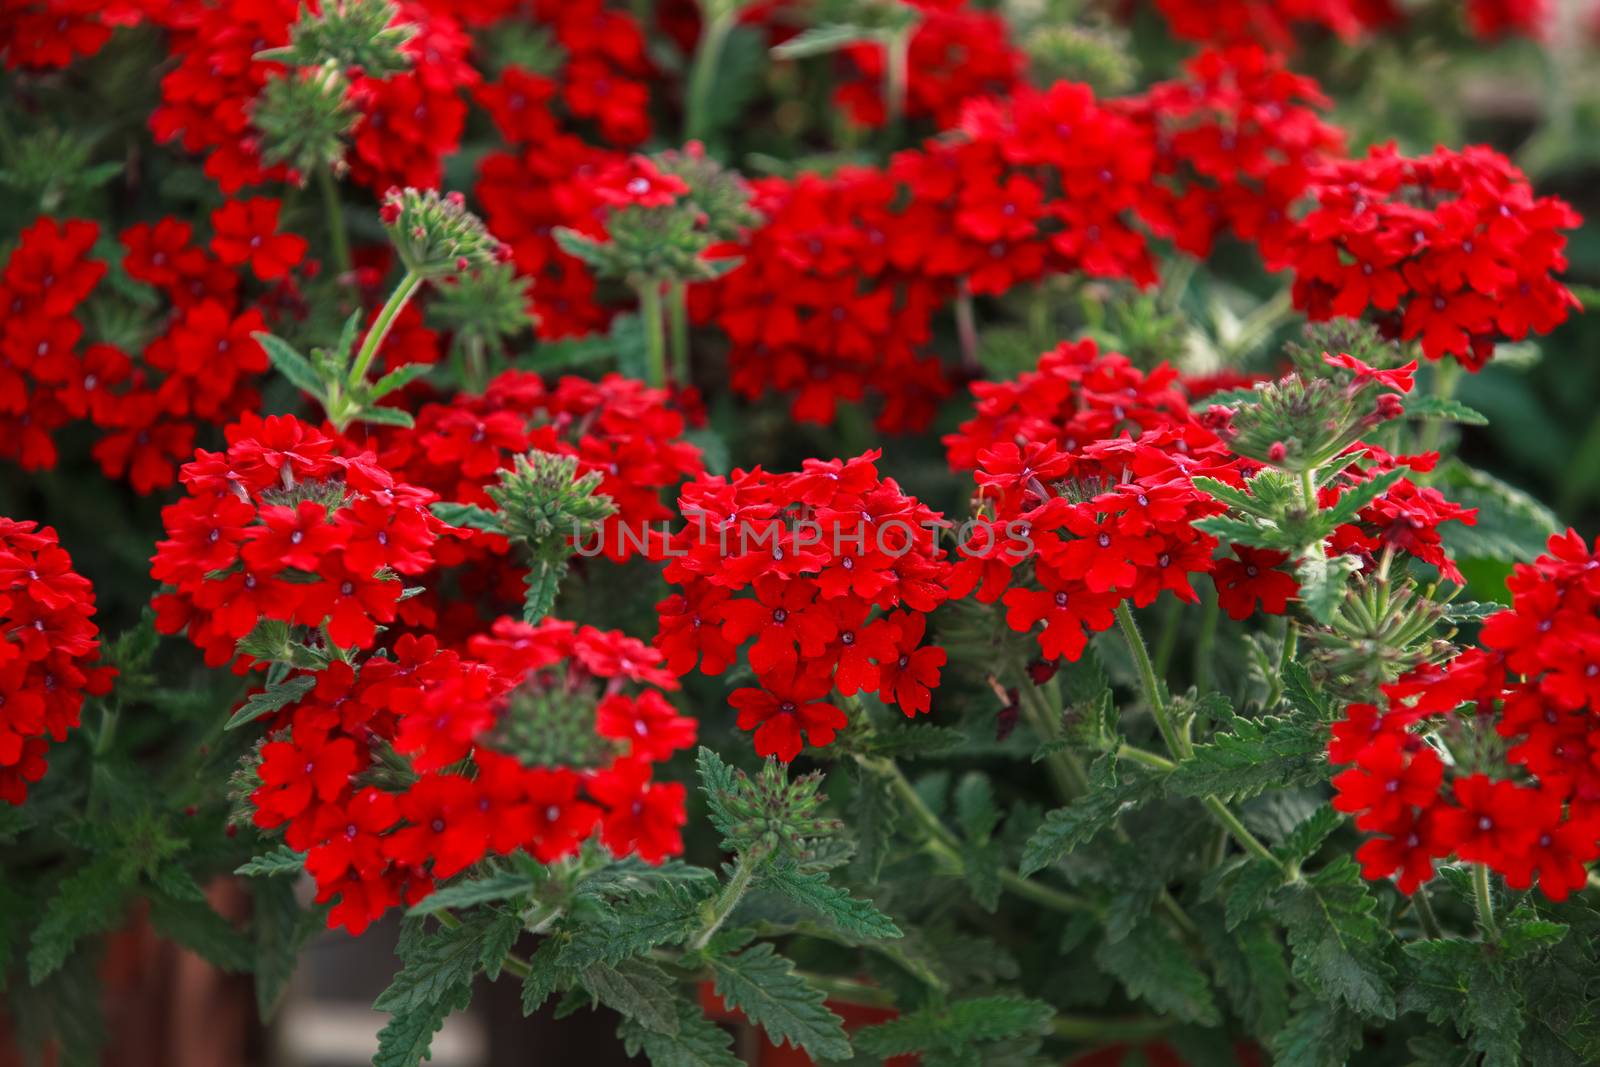 Red geranium flowers by Slast20